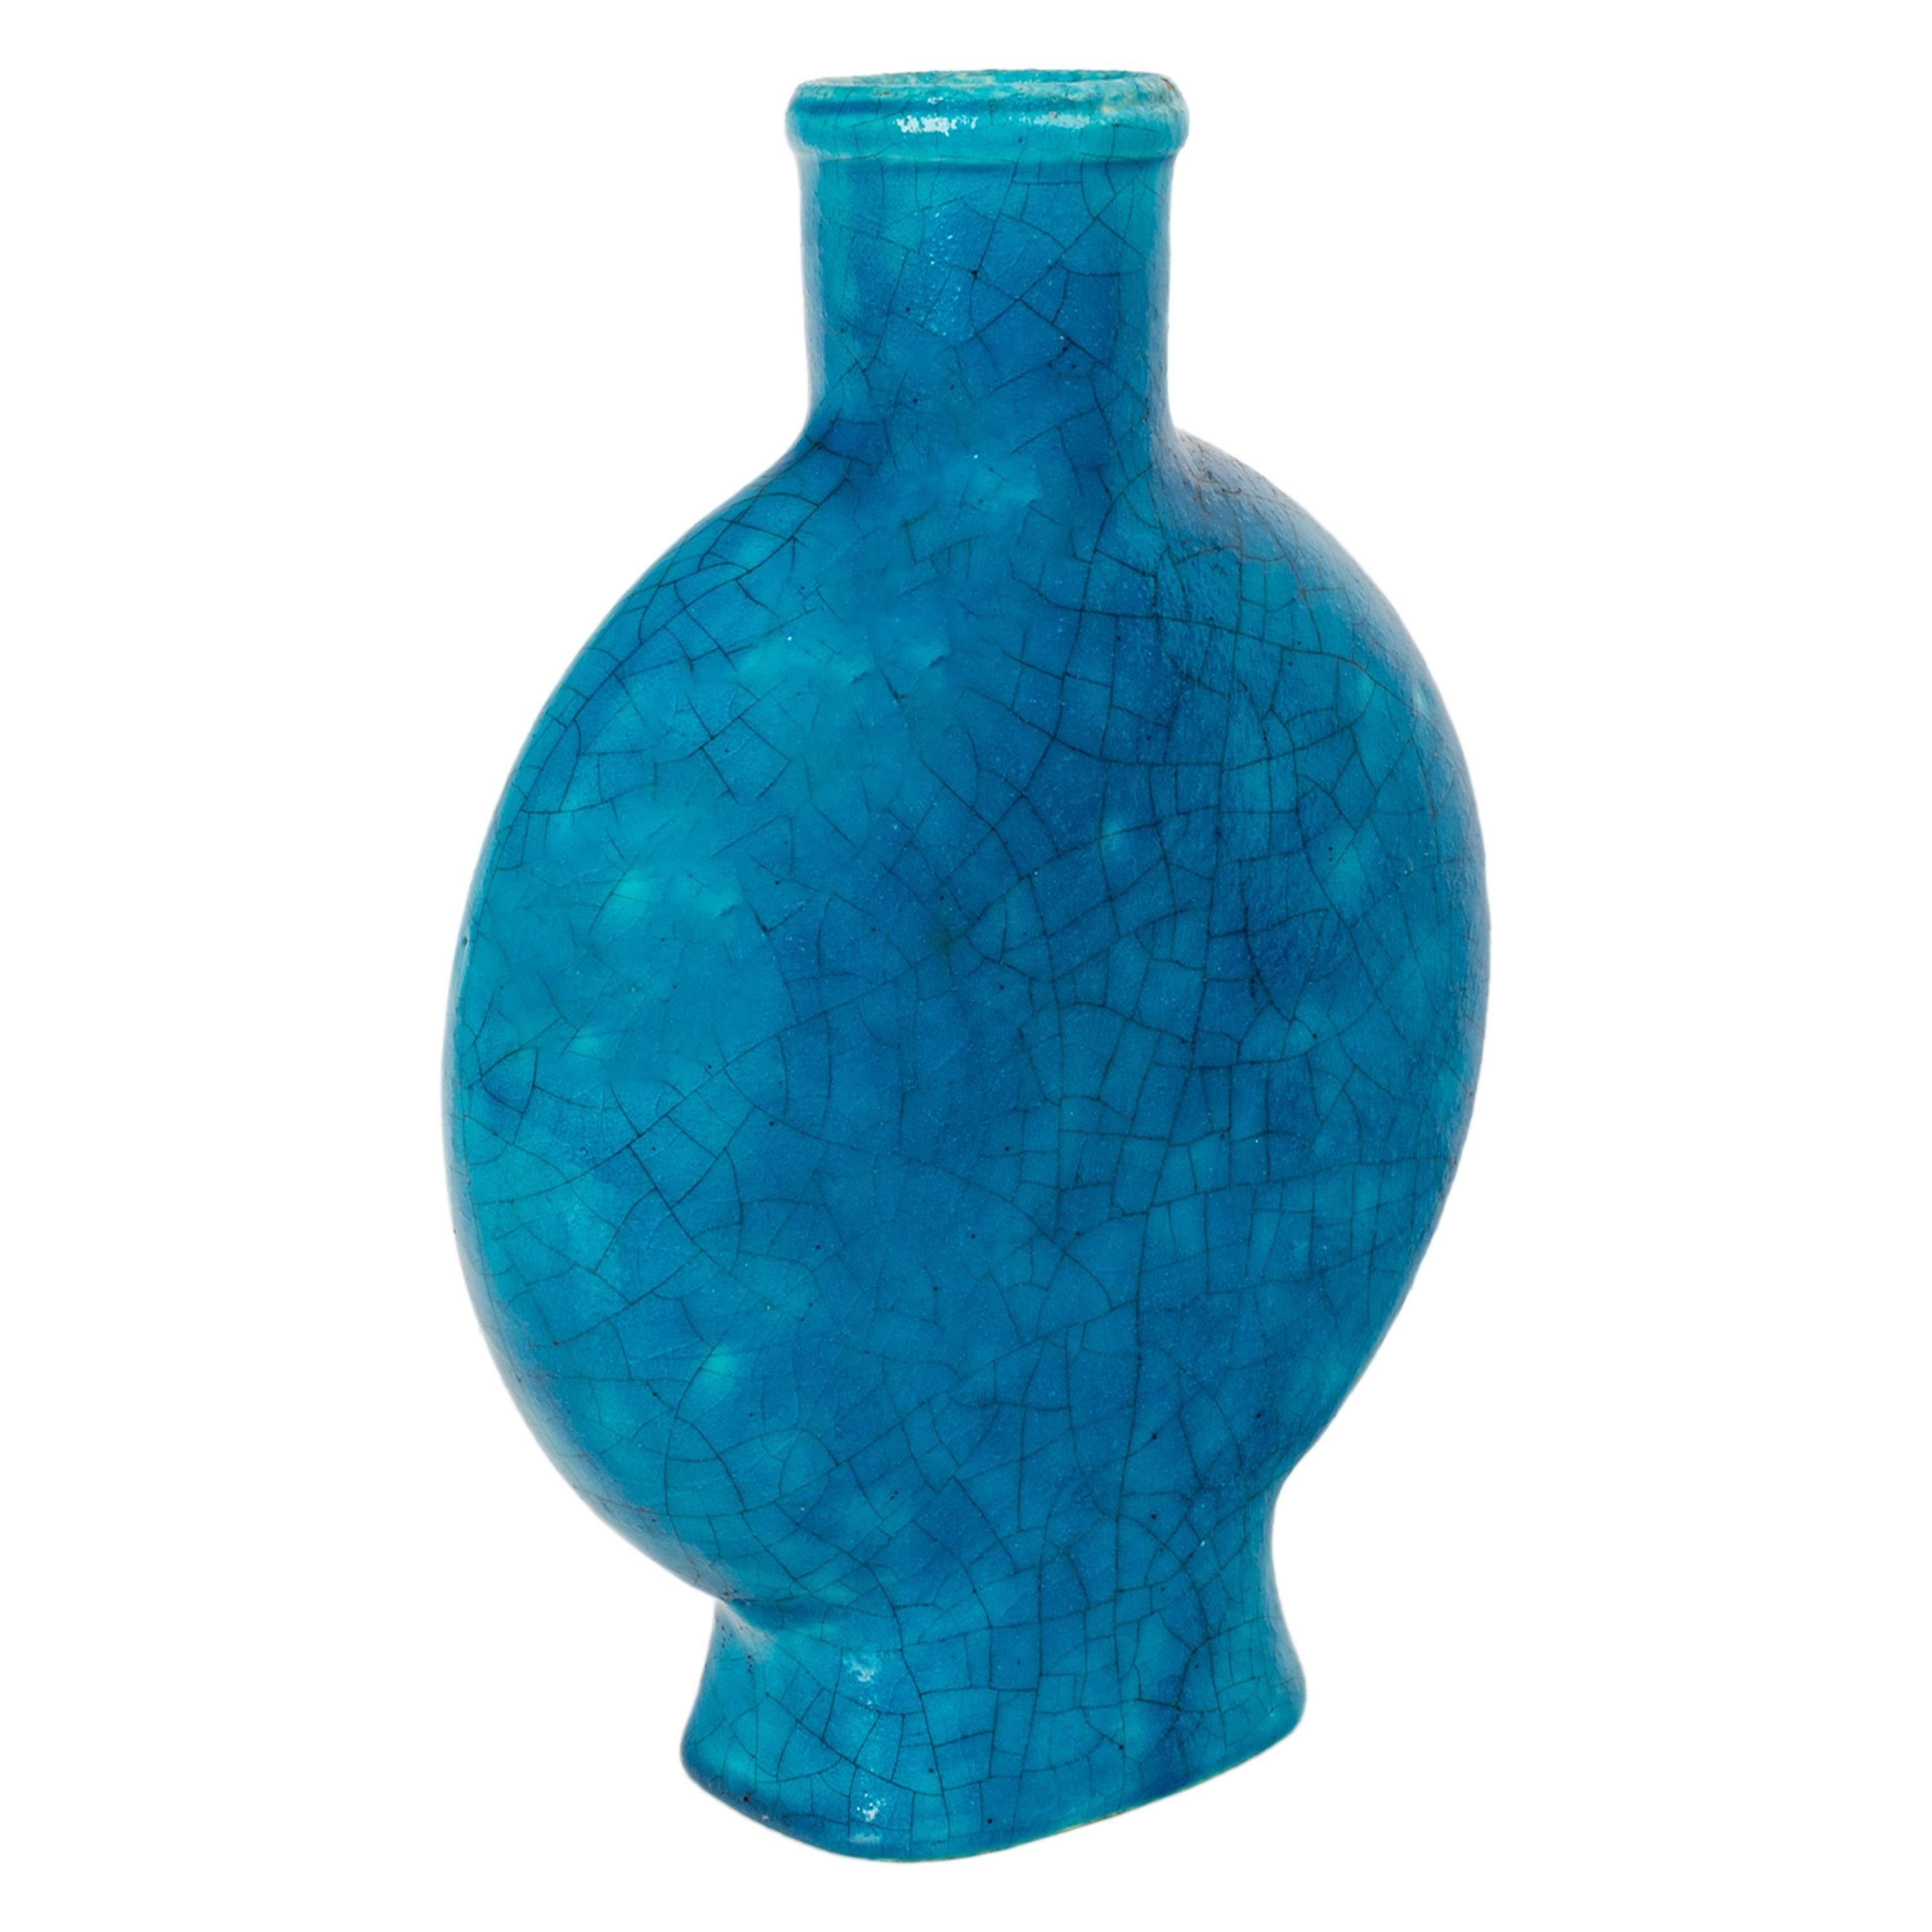 Antique French Art Deco Turquoise Blue Pottery Vase Edmond Lachenal Signed 1930 For Sale 2